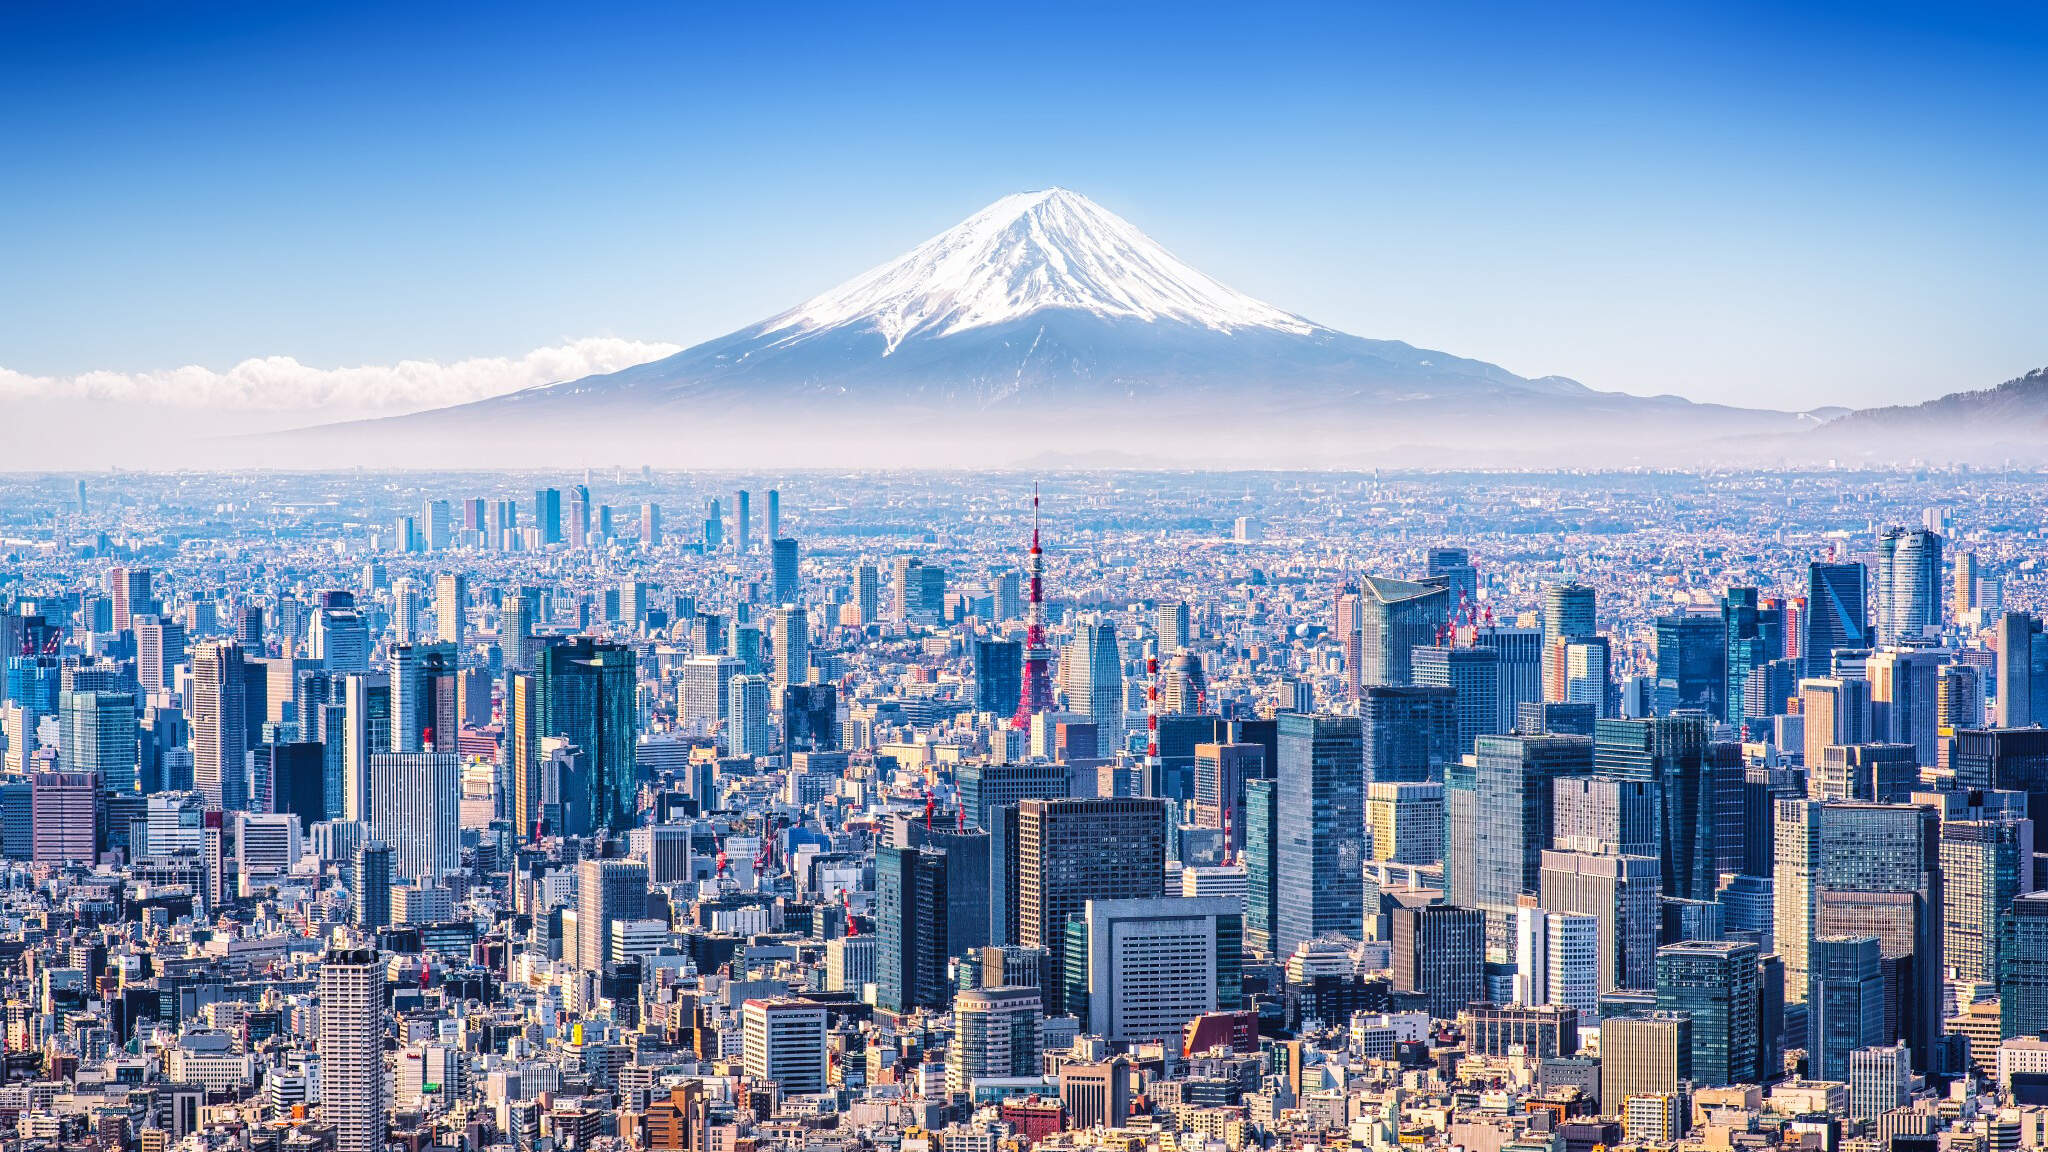 /Tokyo, metropola economică de la poalele Muntelui Fuji.